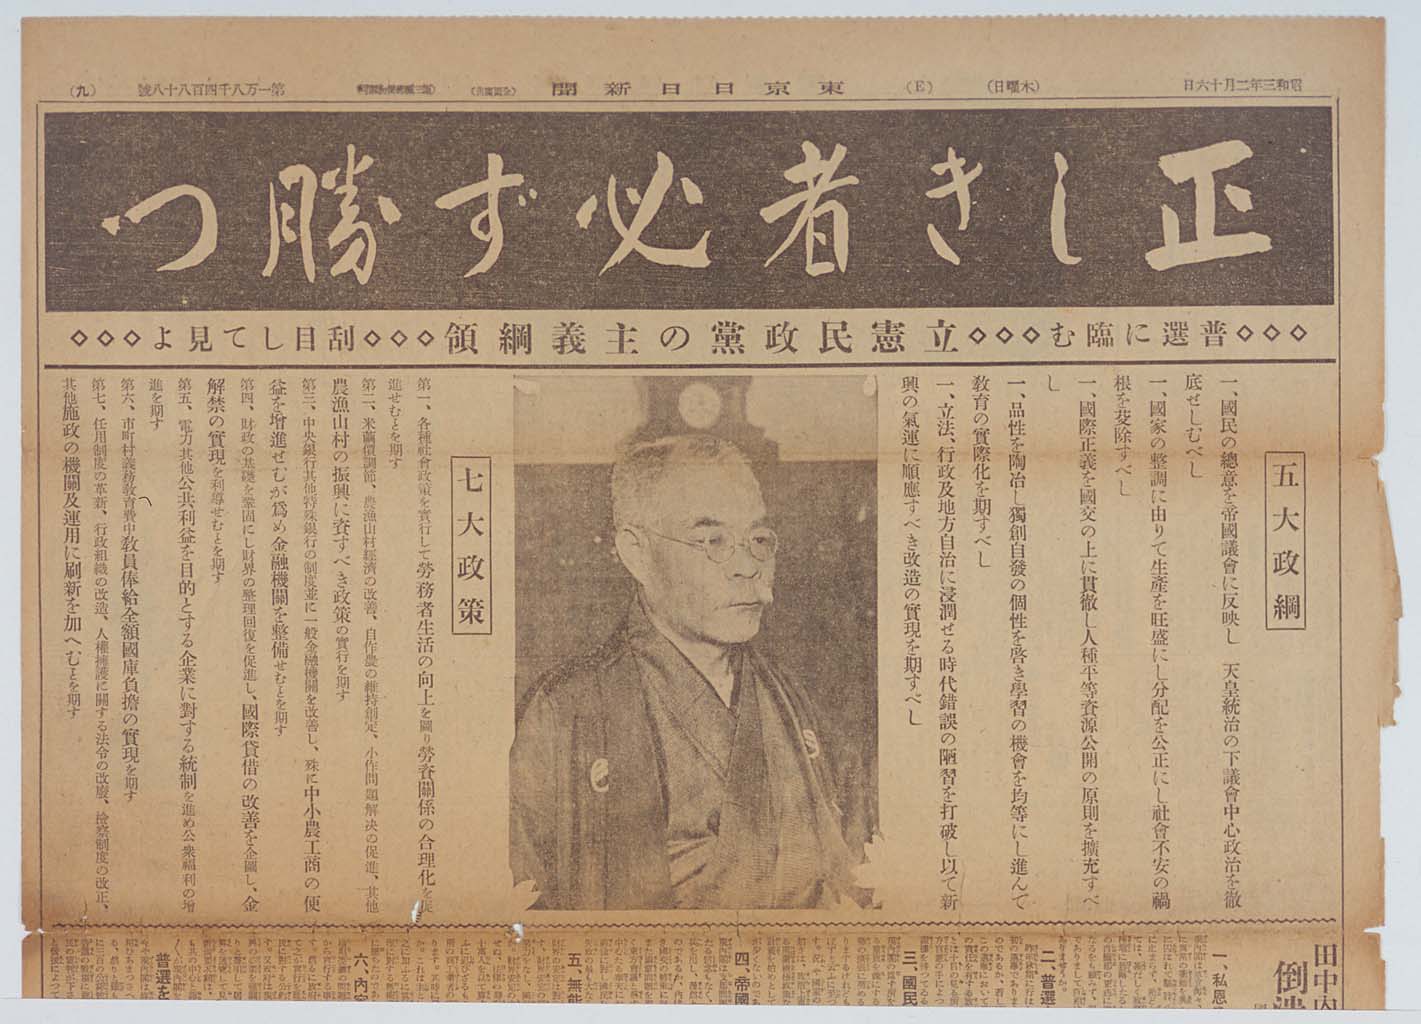 Principles and Platform of the Rikken Minseito Prior to the First Manhood Suffrage Election (Tokyo Nichinichi Shinbun)(larger)